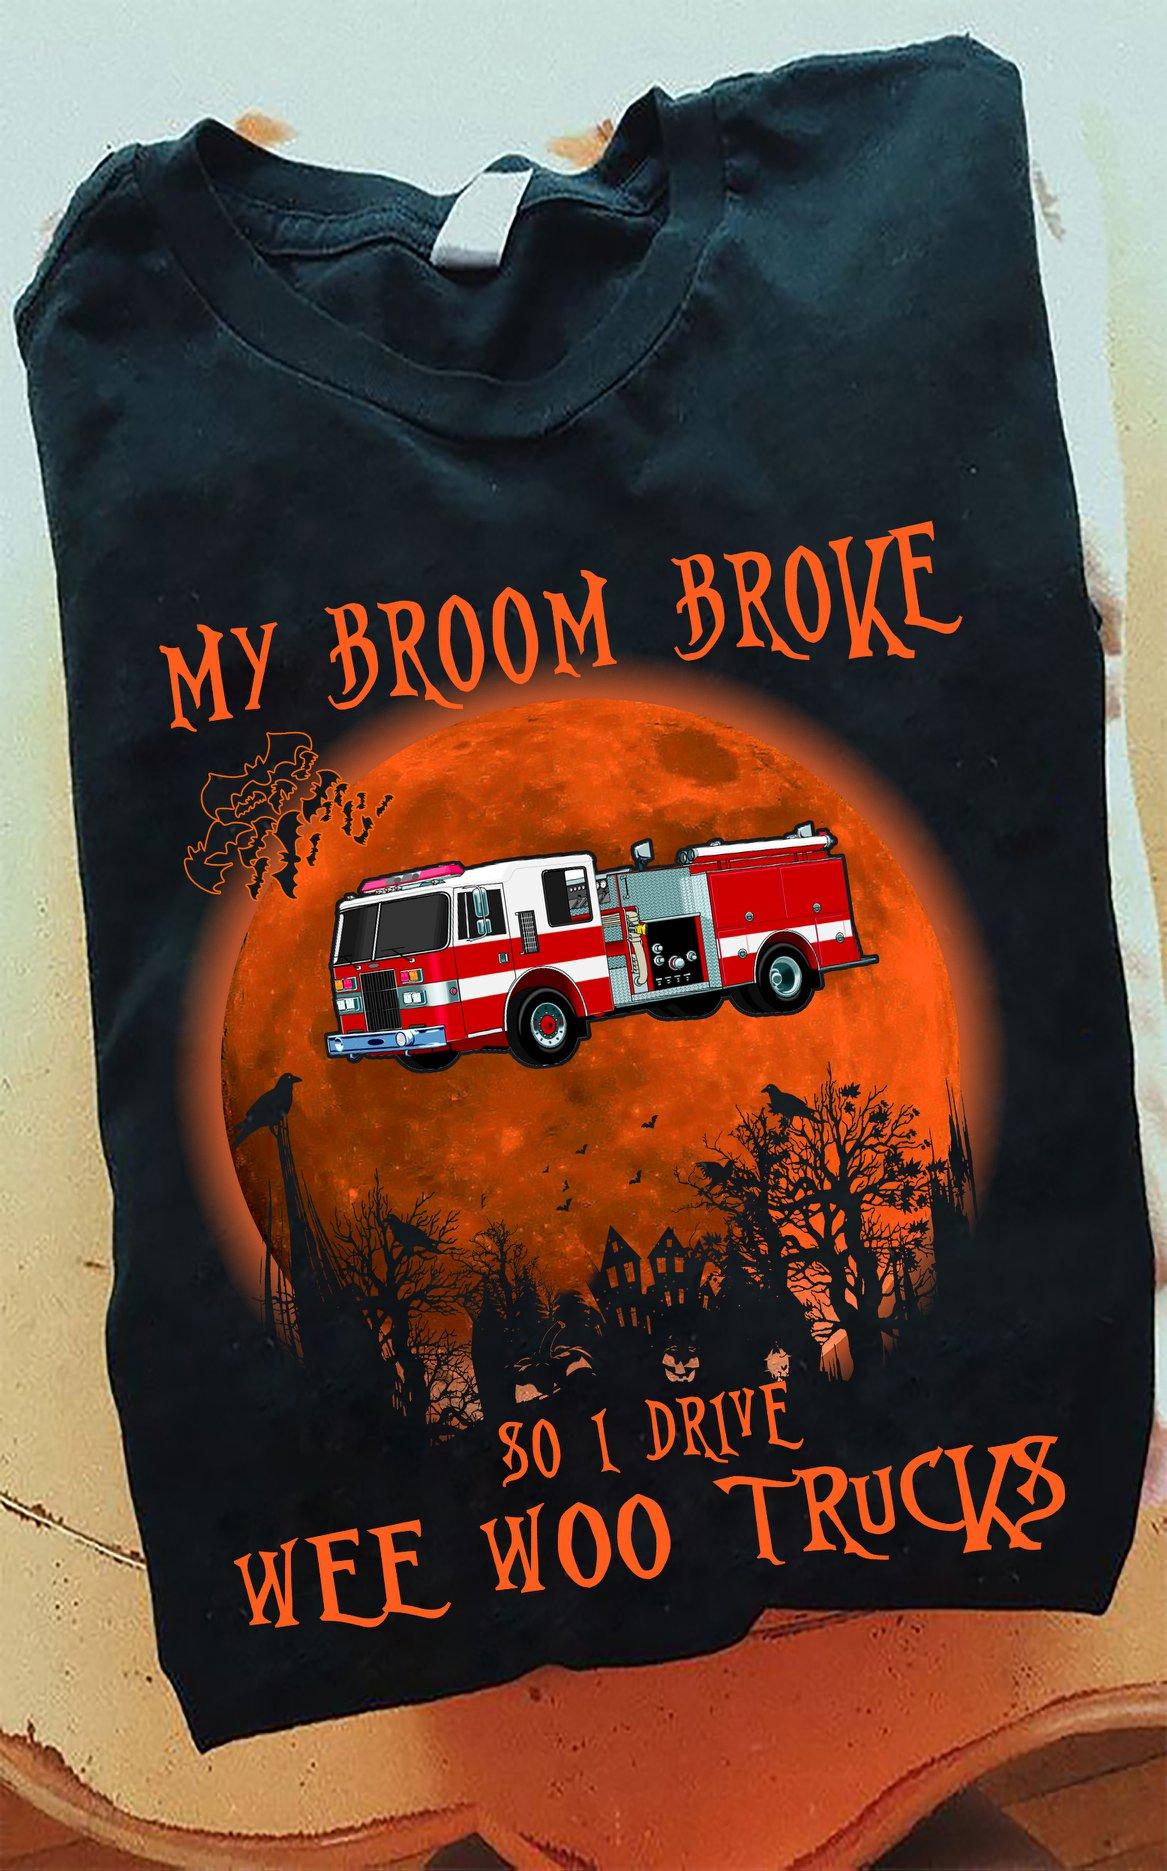 My broom broke so I drive wee woo trucks - Firefighter truck driver, Halloween truck driver's gift